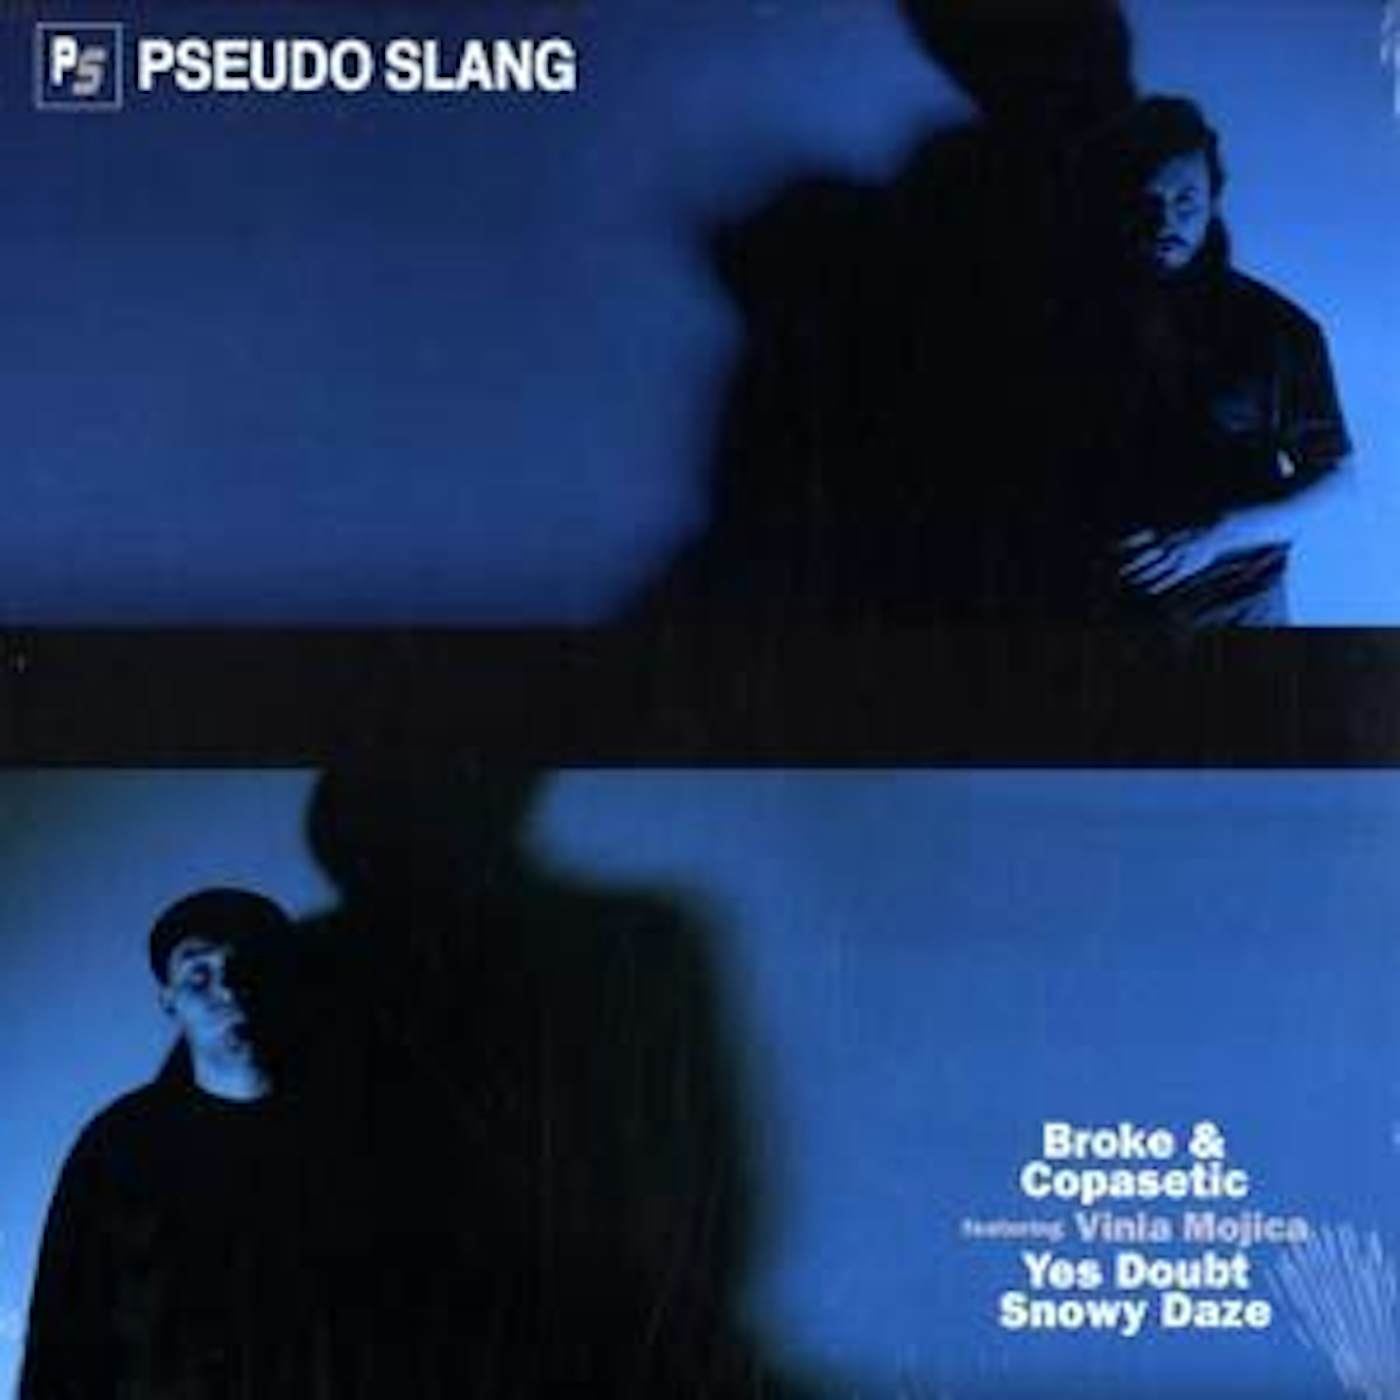 Pseudo Slang BROKE / VINIAMOJICA Vinyl Record